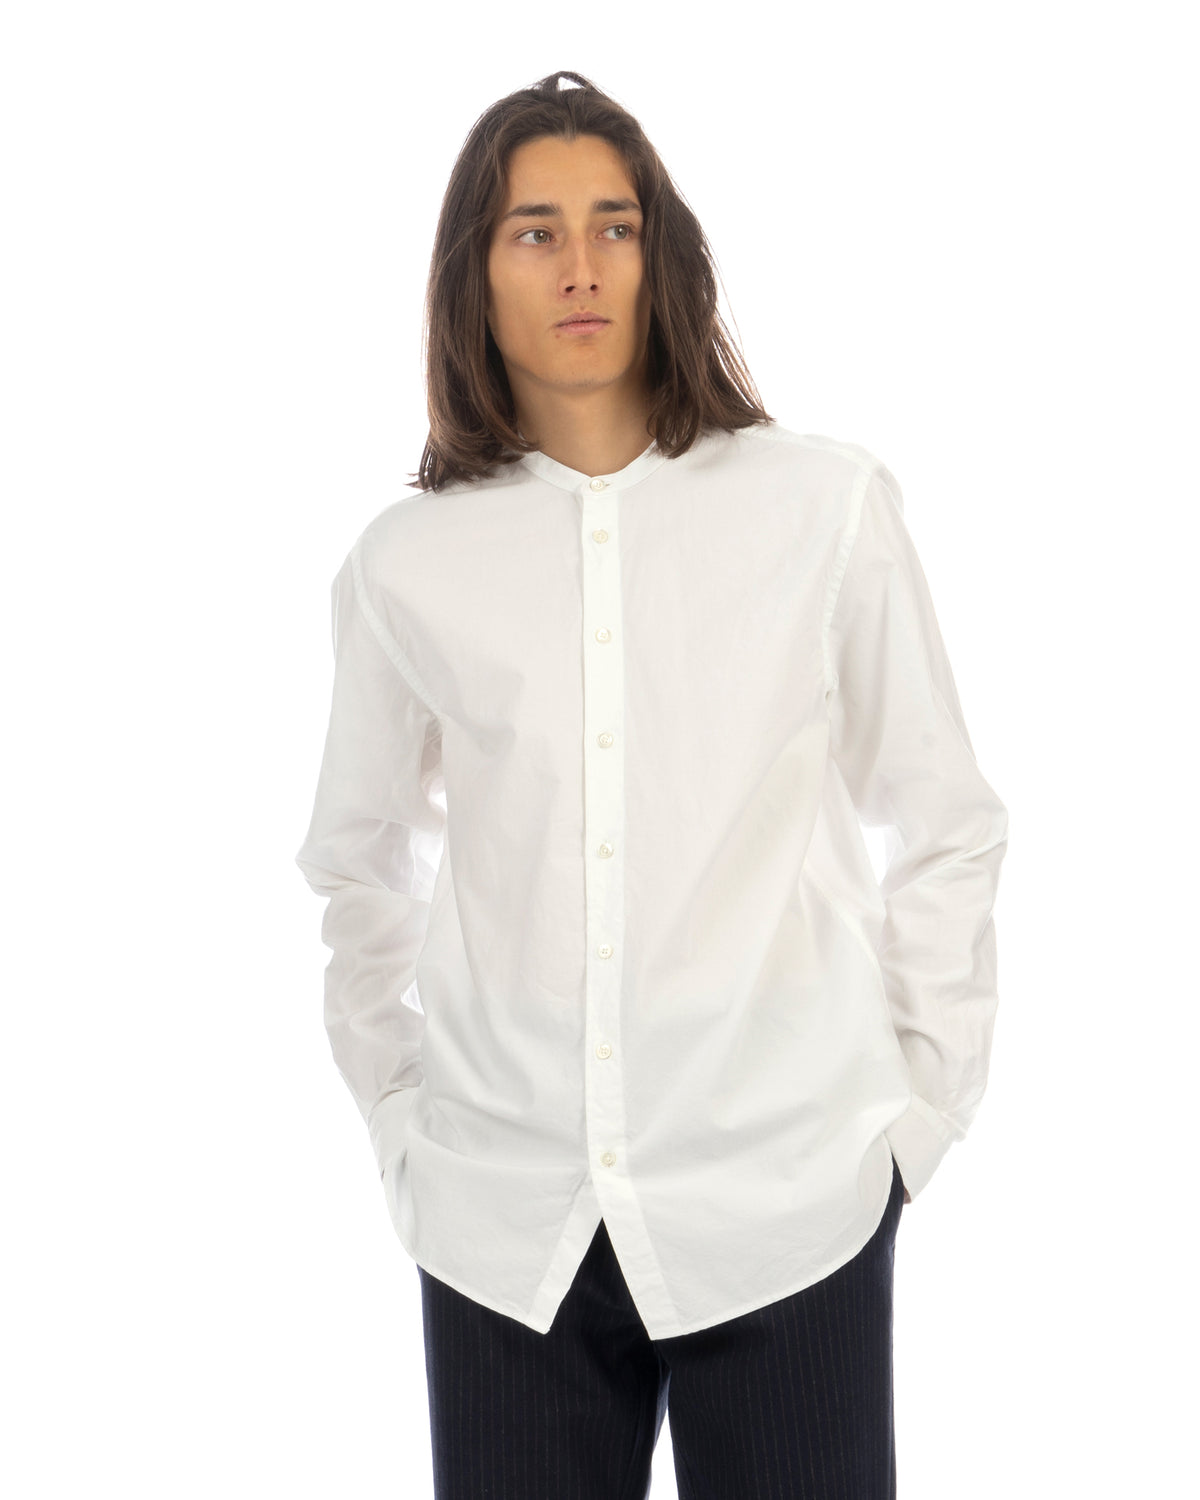 Hansen | 'Ante' Collarless Shirt White - Concrete